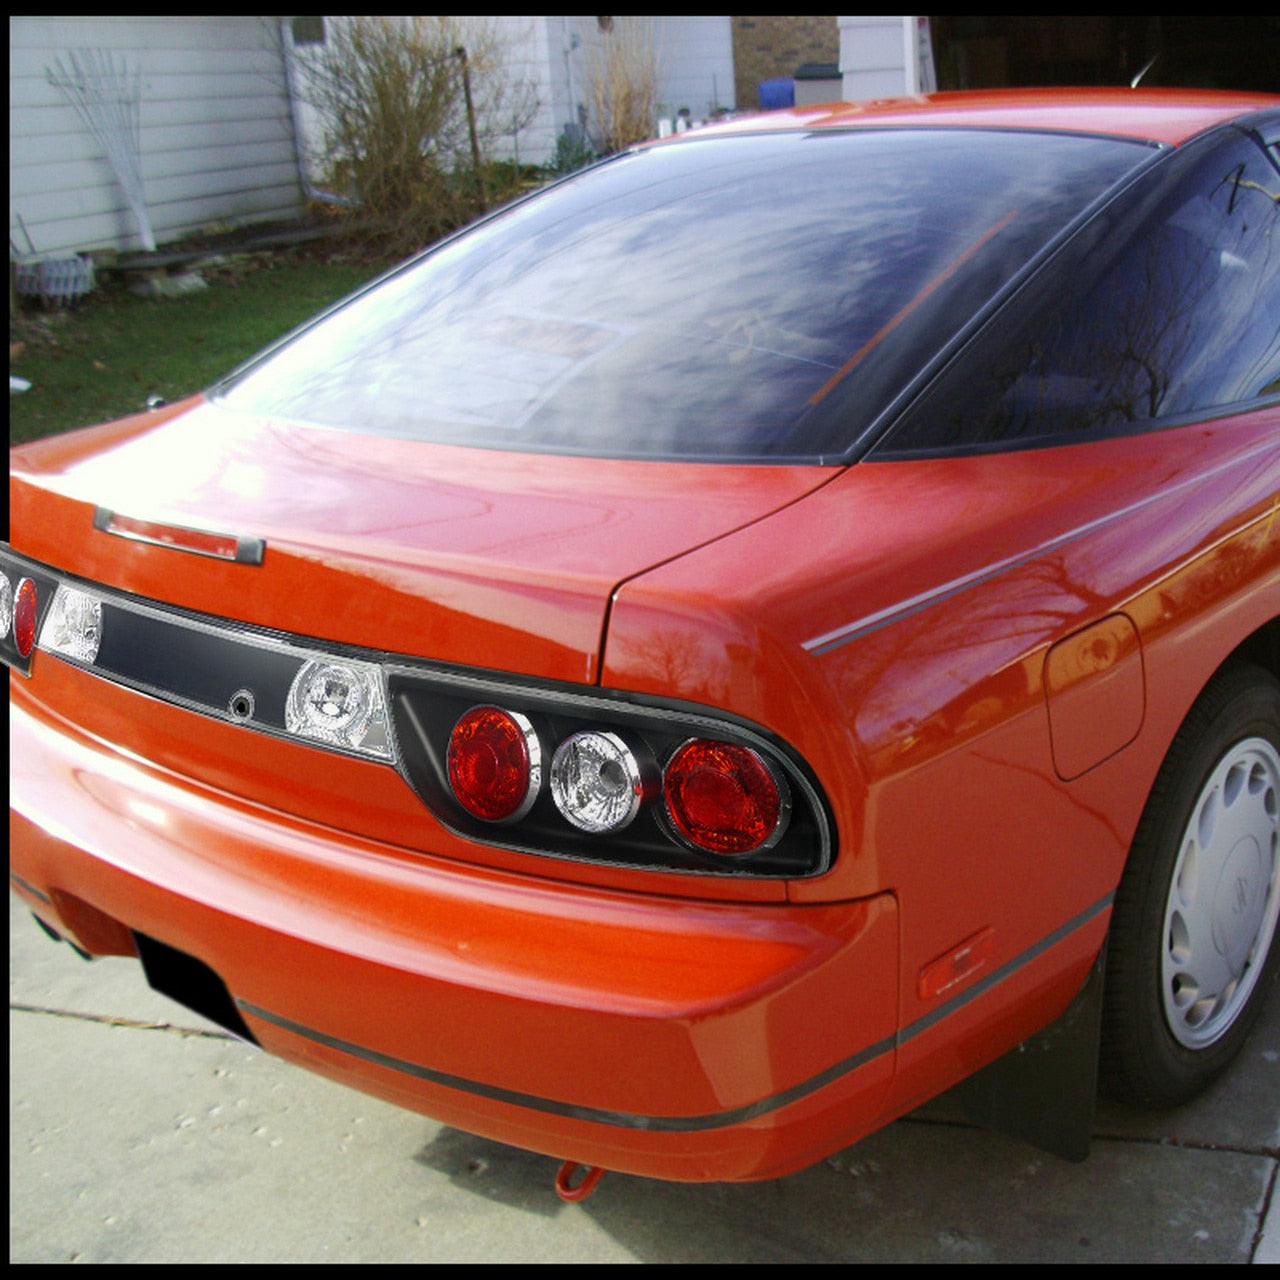 Kirkestol Hindre Frosset Spec-D Tail Lights Nissan 240SX S13 Hatchback (89-94) w/ Center Trunk –  Redline360